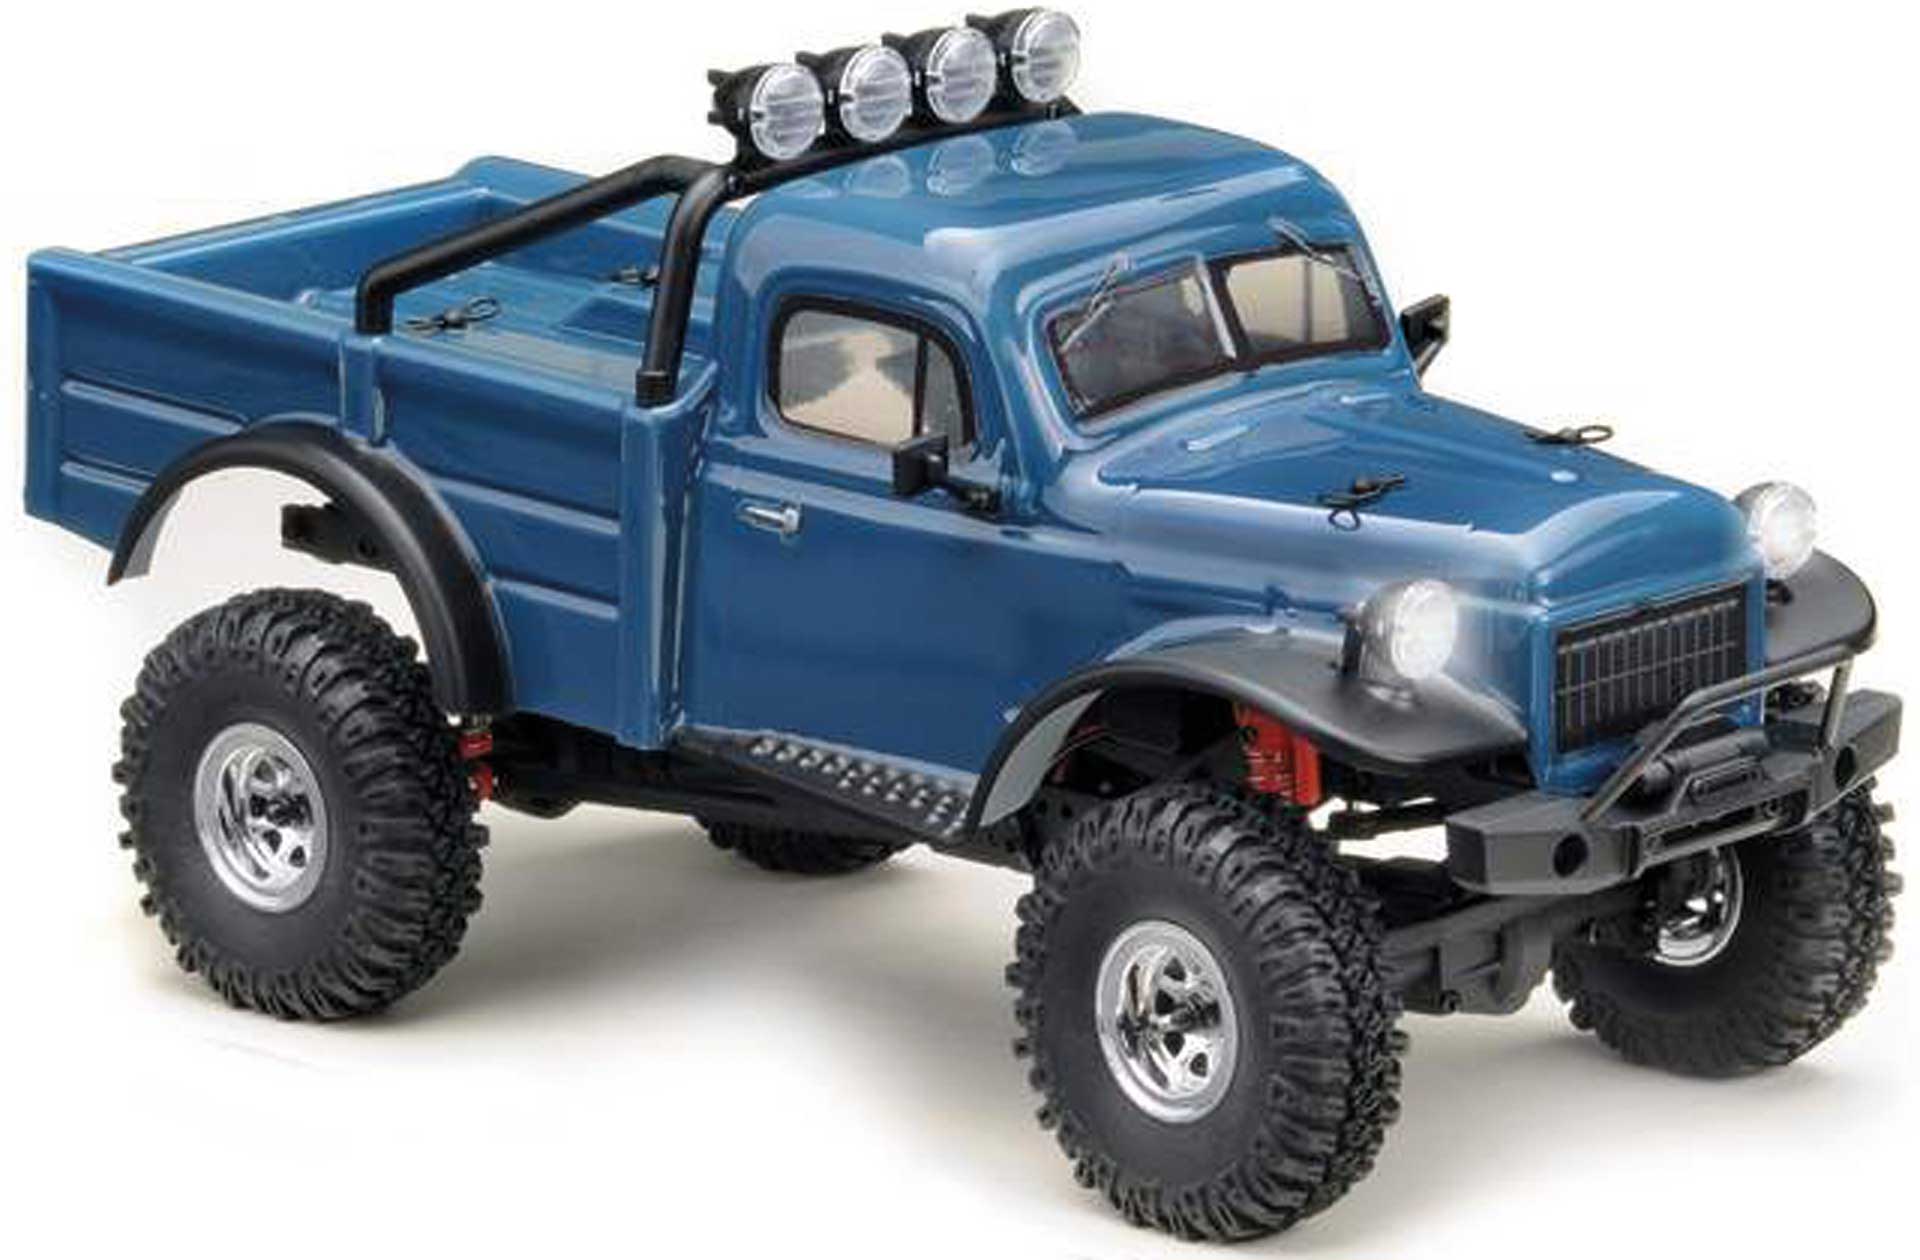 ABSIMA 1:18 Mini Crawler "Power Wagon" blue RTR